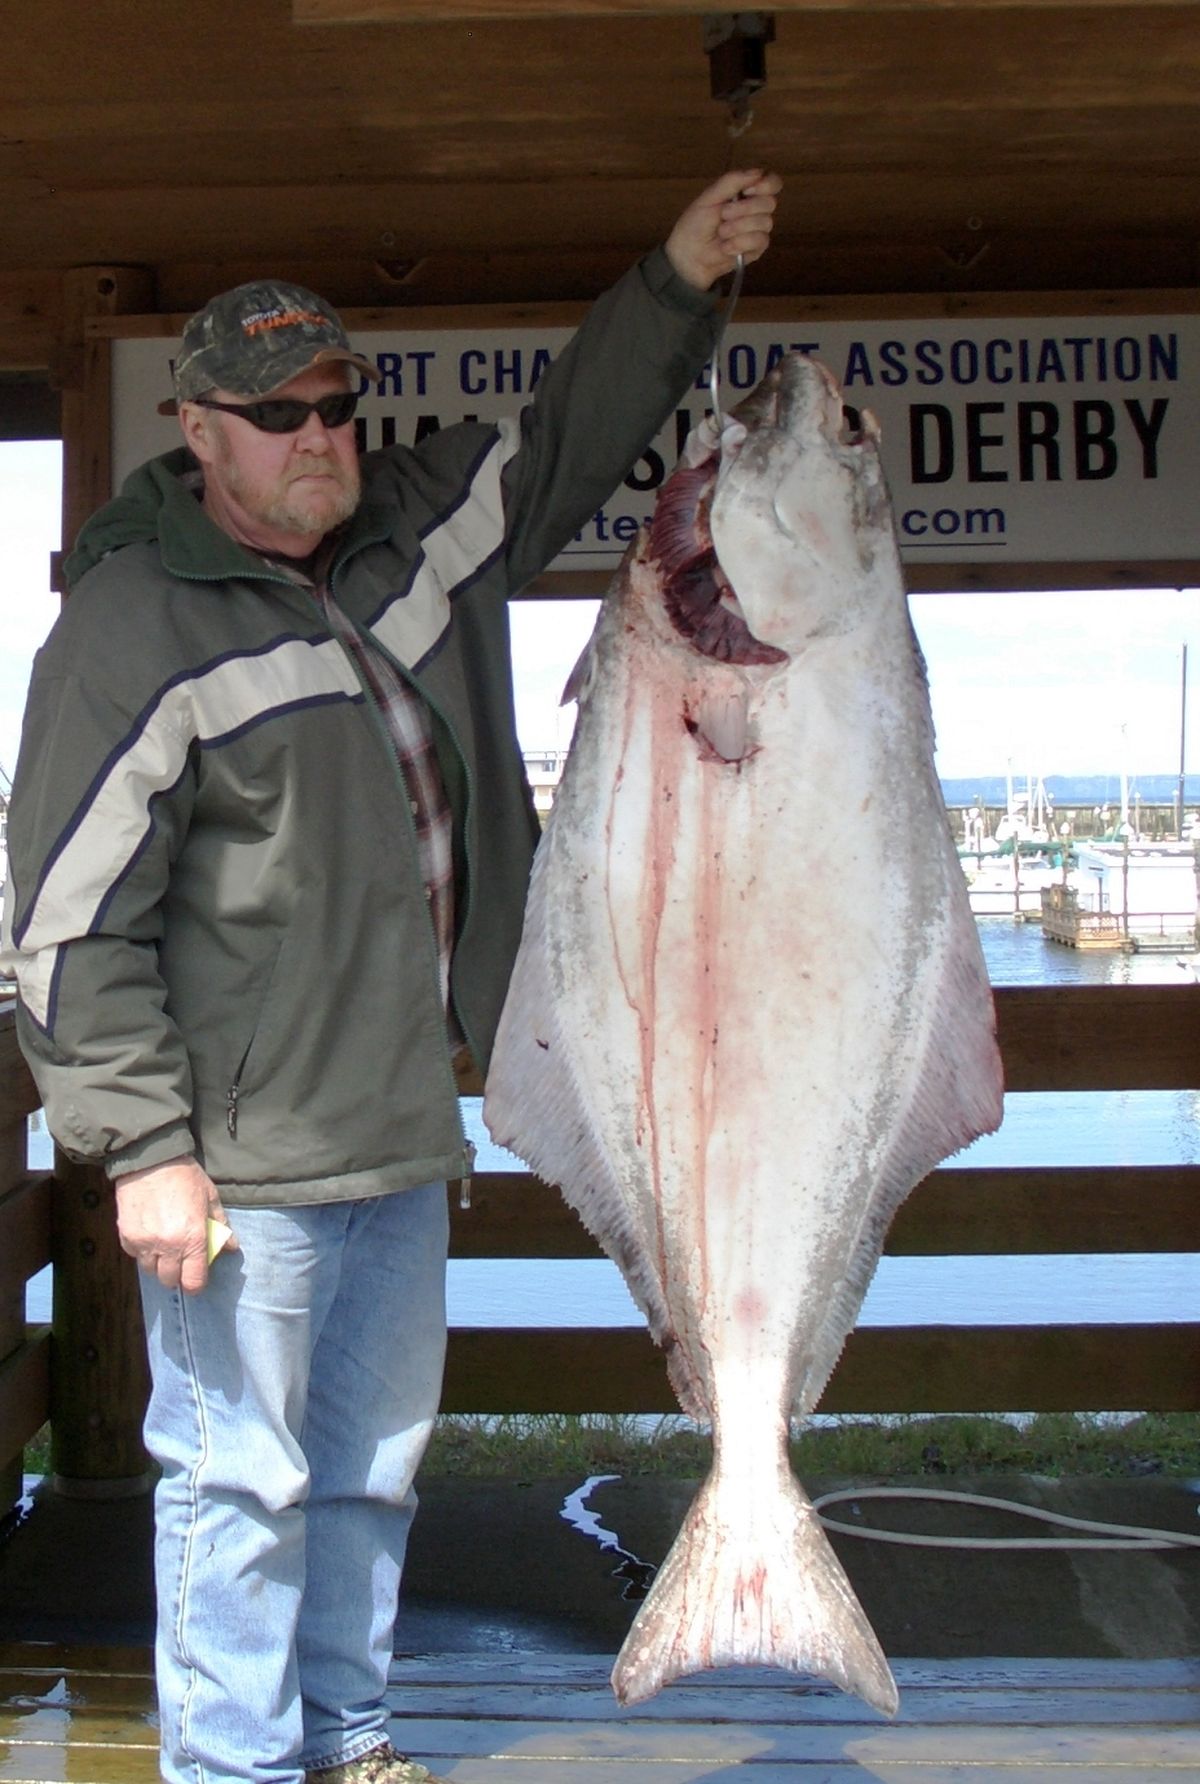 Great halibut fishing success leads to shorter seasons | The Spokesman